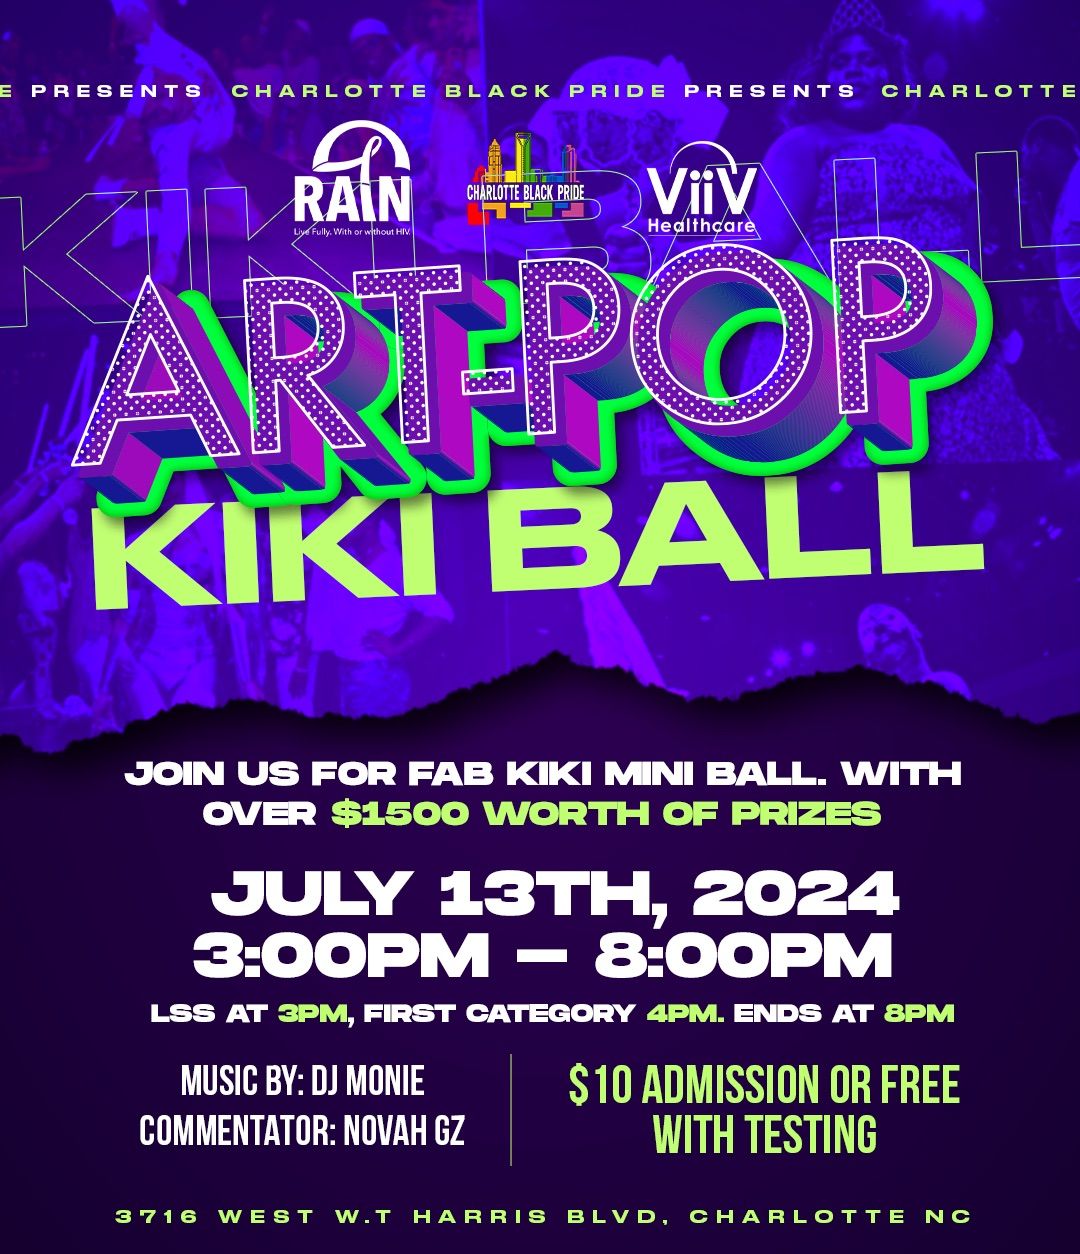 Charlotte Black Pride's Inaugural Art Pop Kiki Ball 